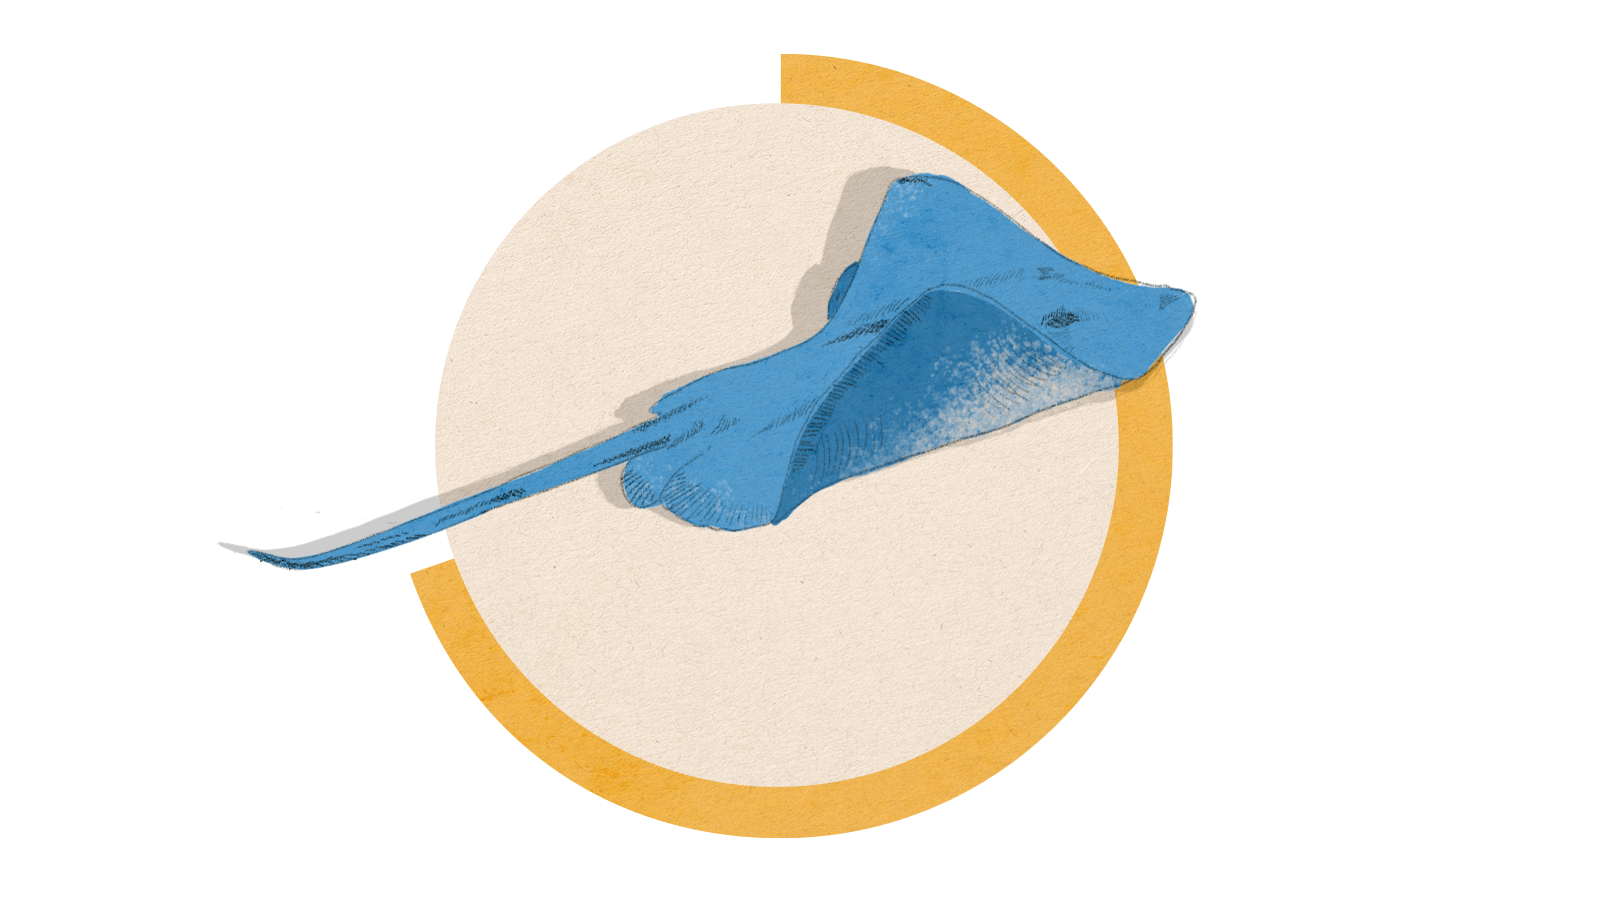 Illustration of a blue stingray on a circle background.